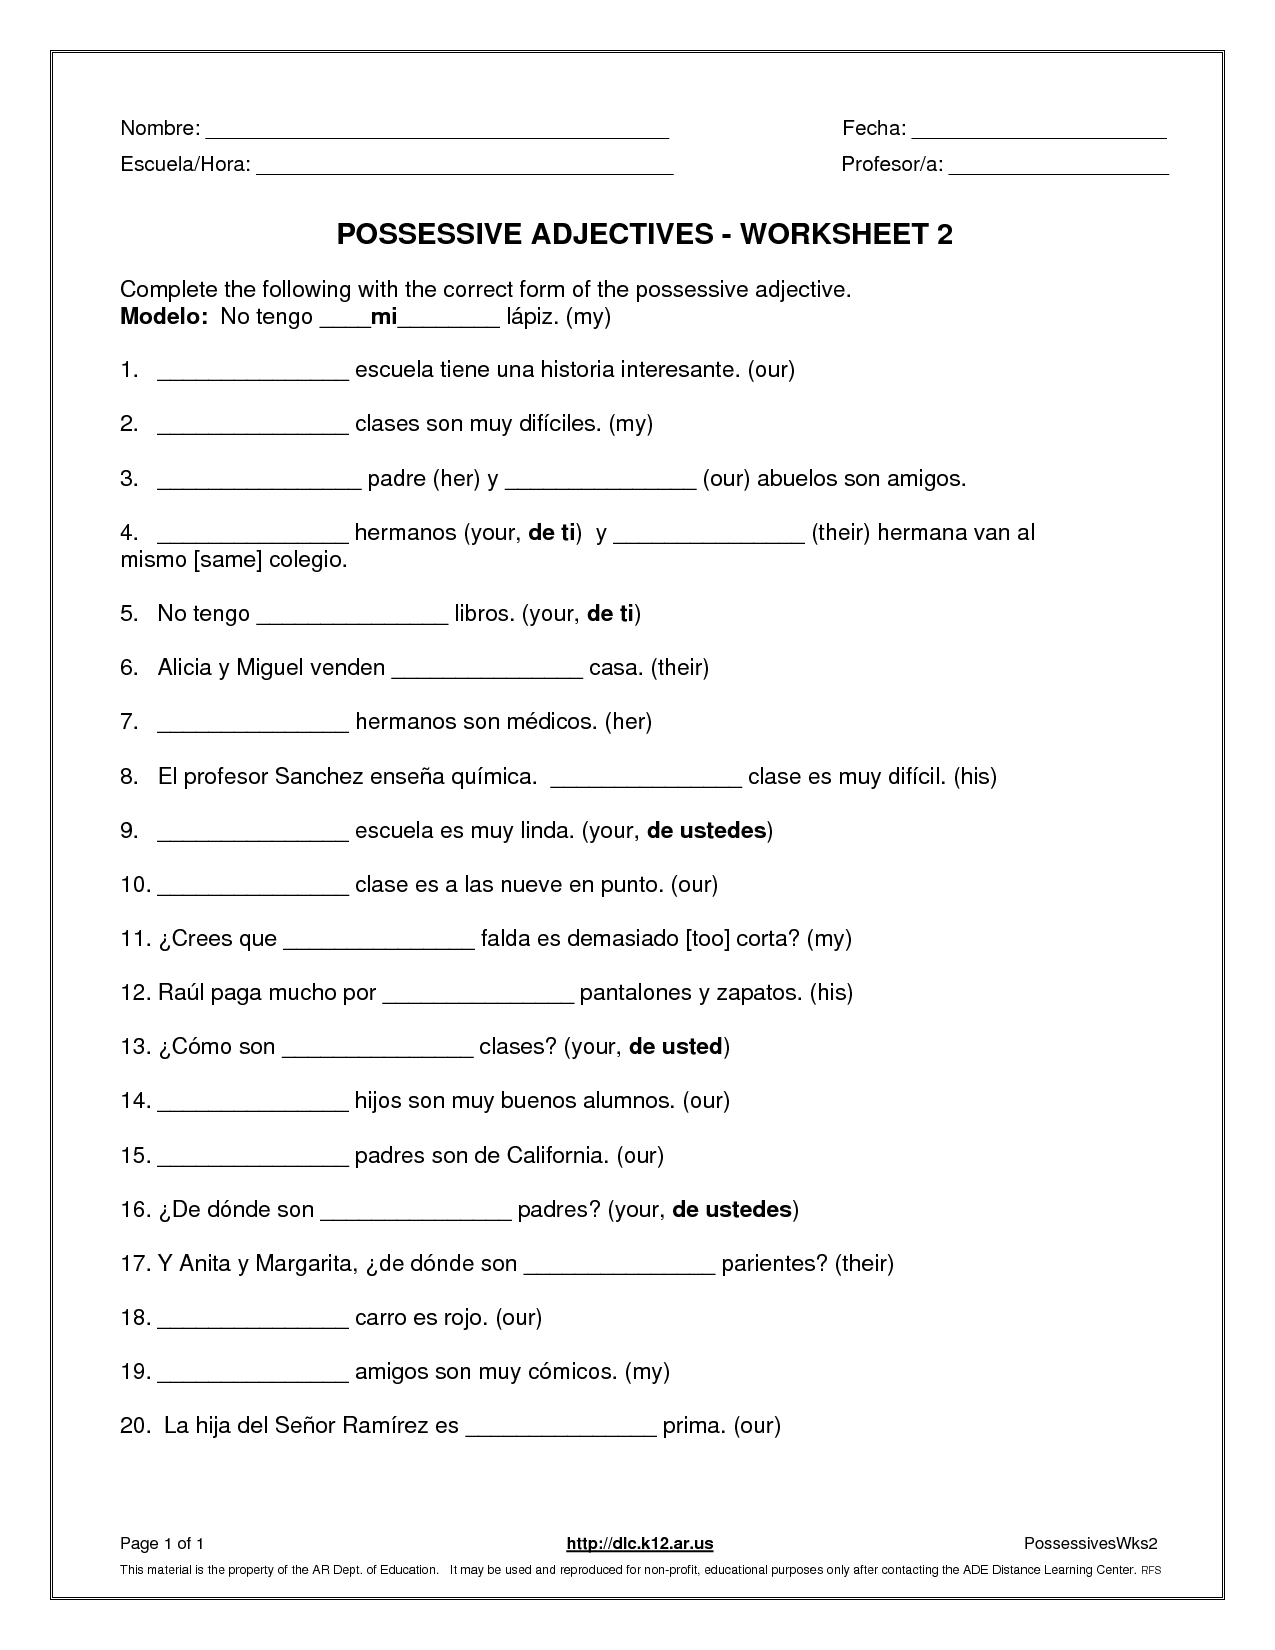 Spanish Possessive Adjectives Worksheet Image